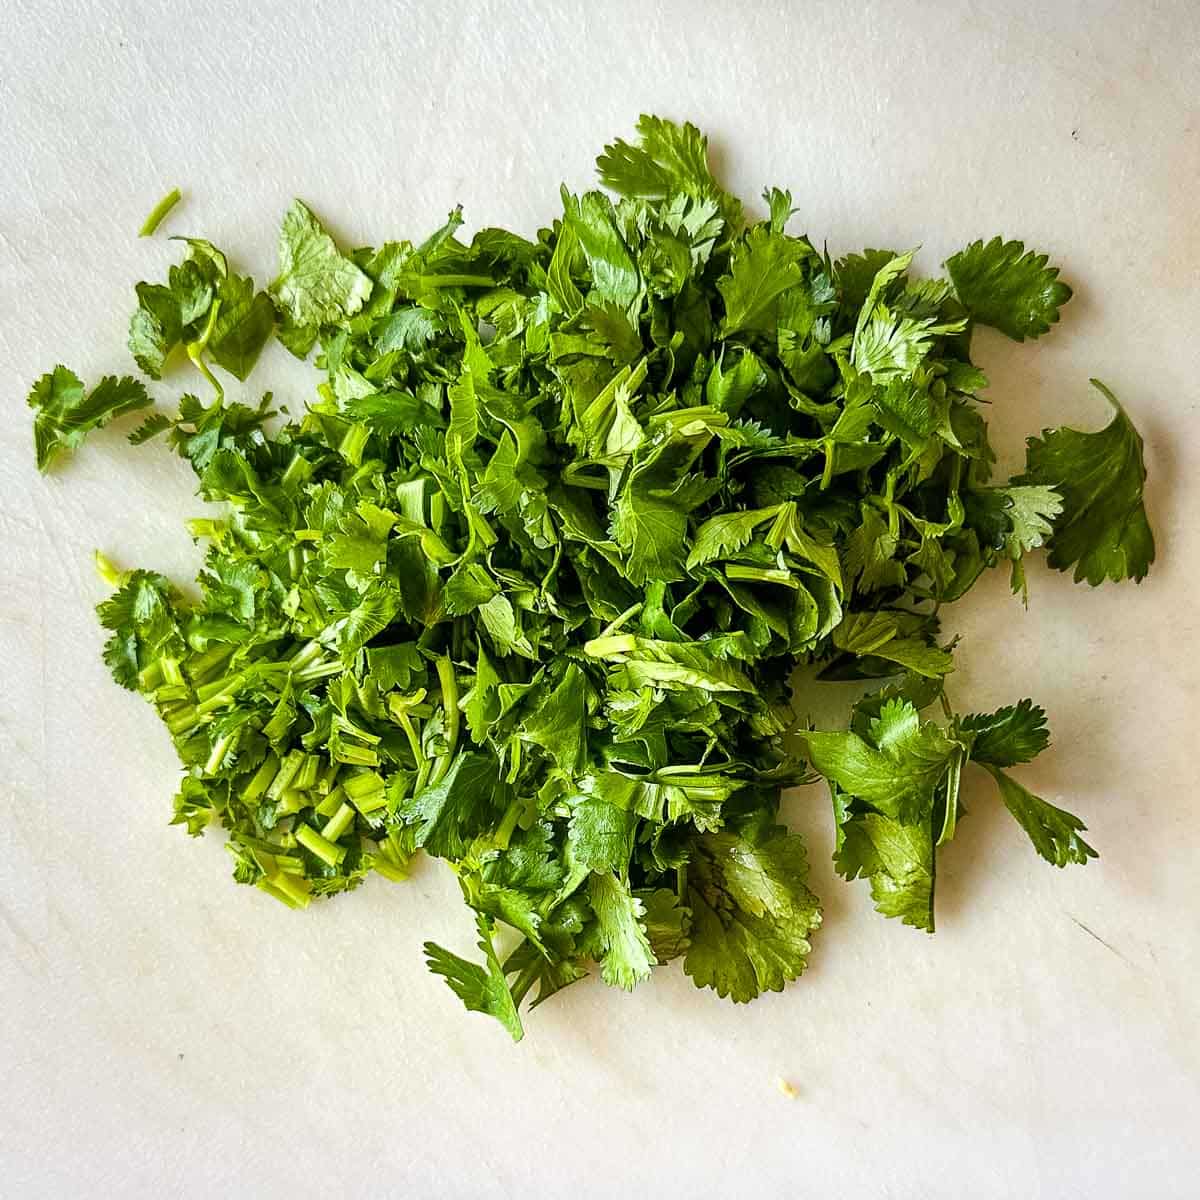 Chopped cilantro on a white cutting board.